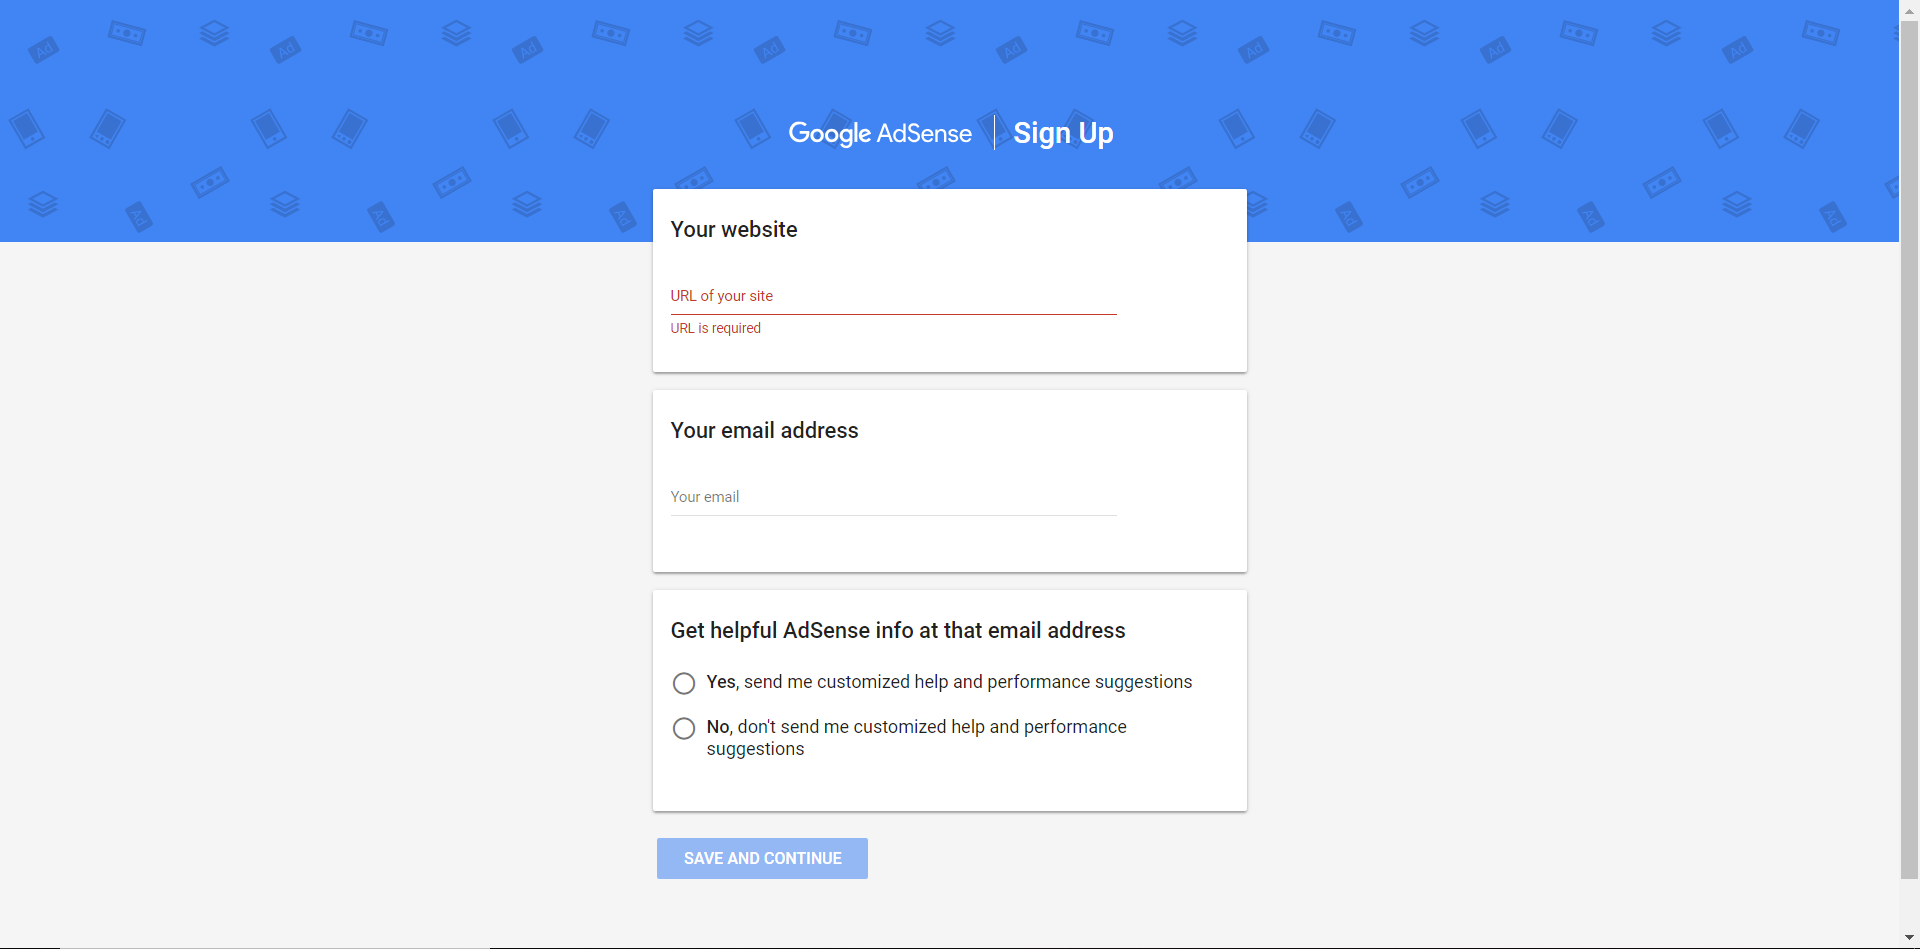 Step 2 - Sign Up to Google AdSense